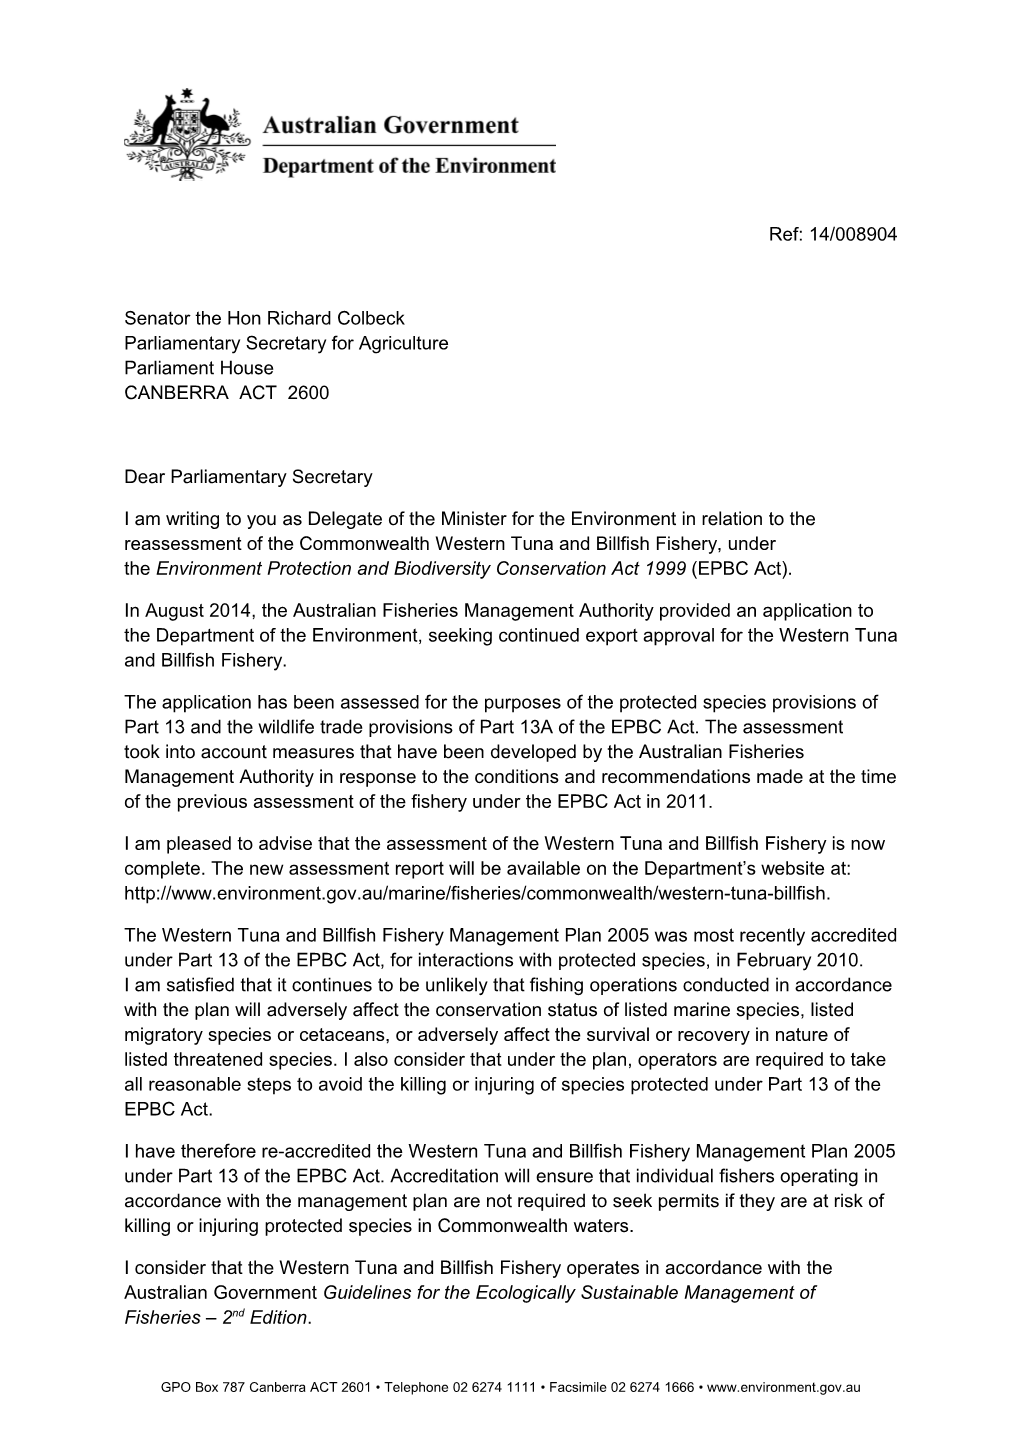 Letter to Senator Colbeck November 2014